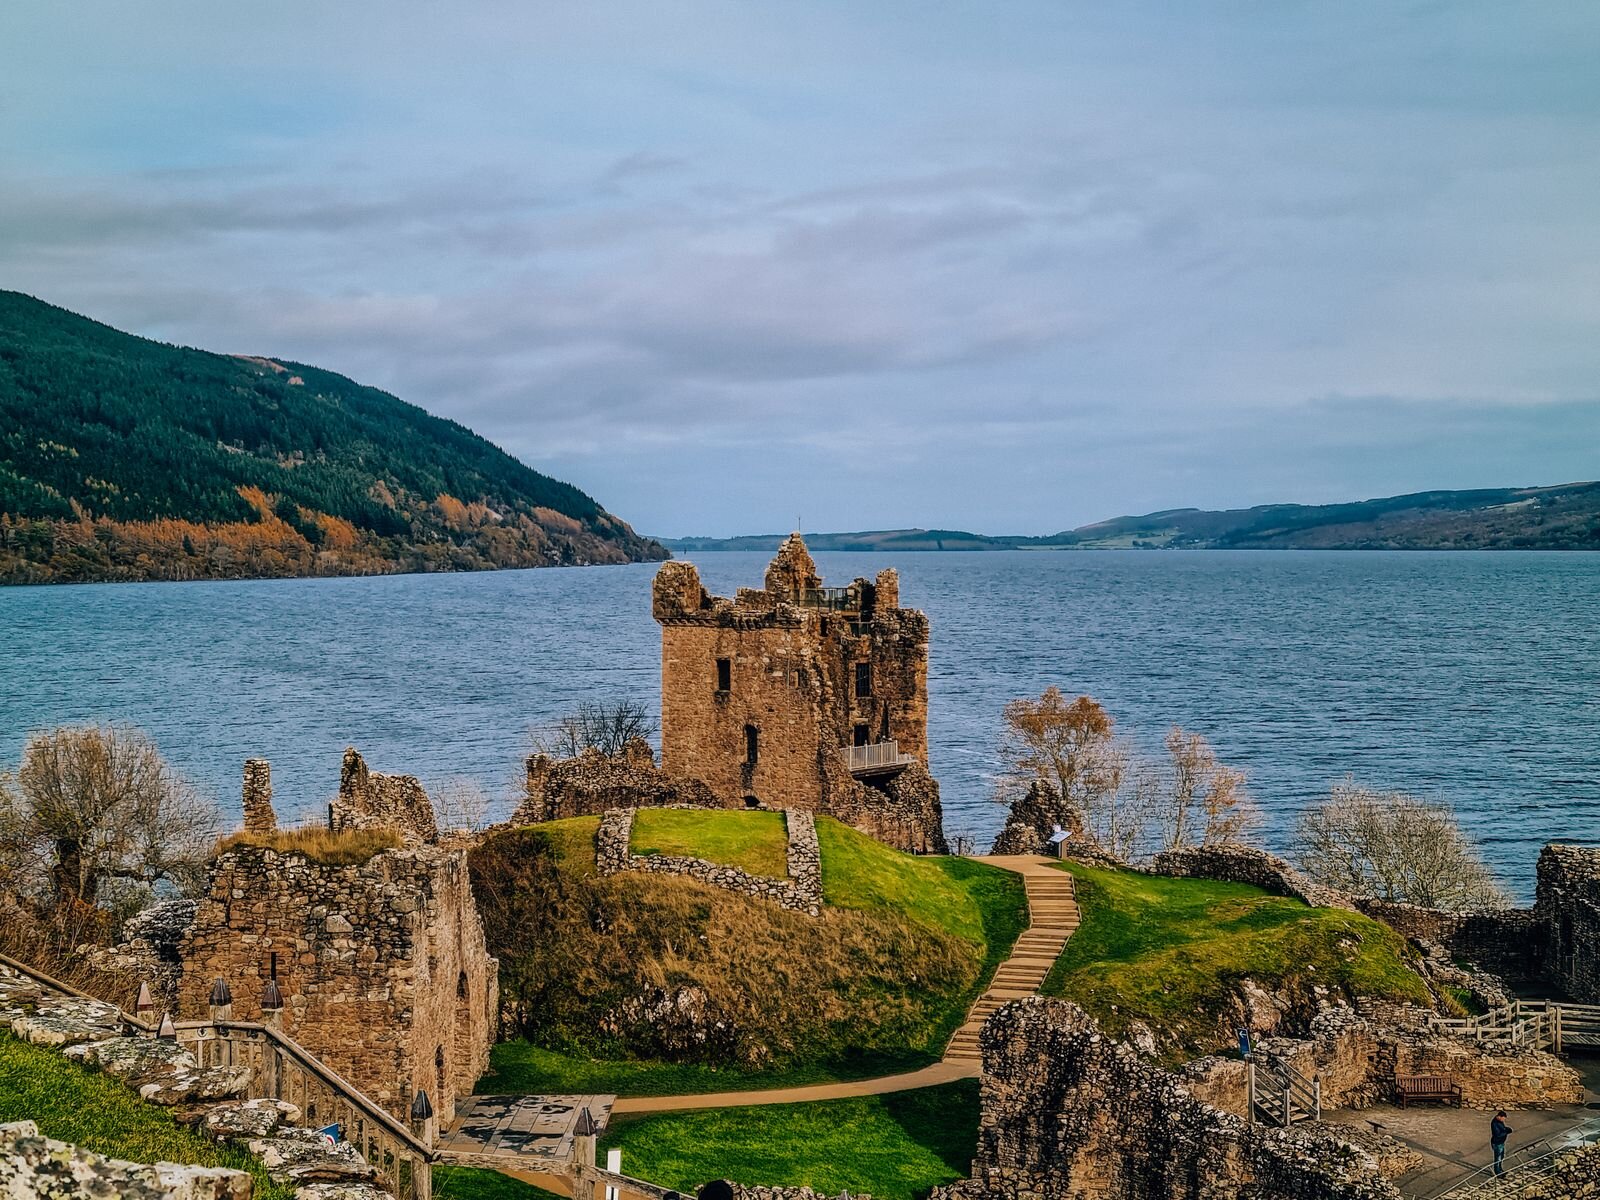 Urquhart Castle Loch Ness Scotland